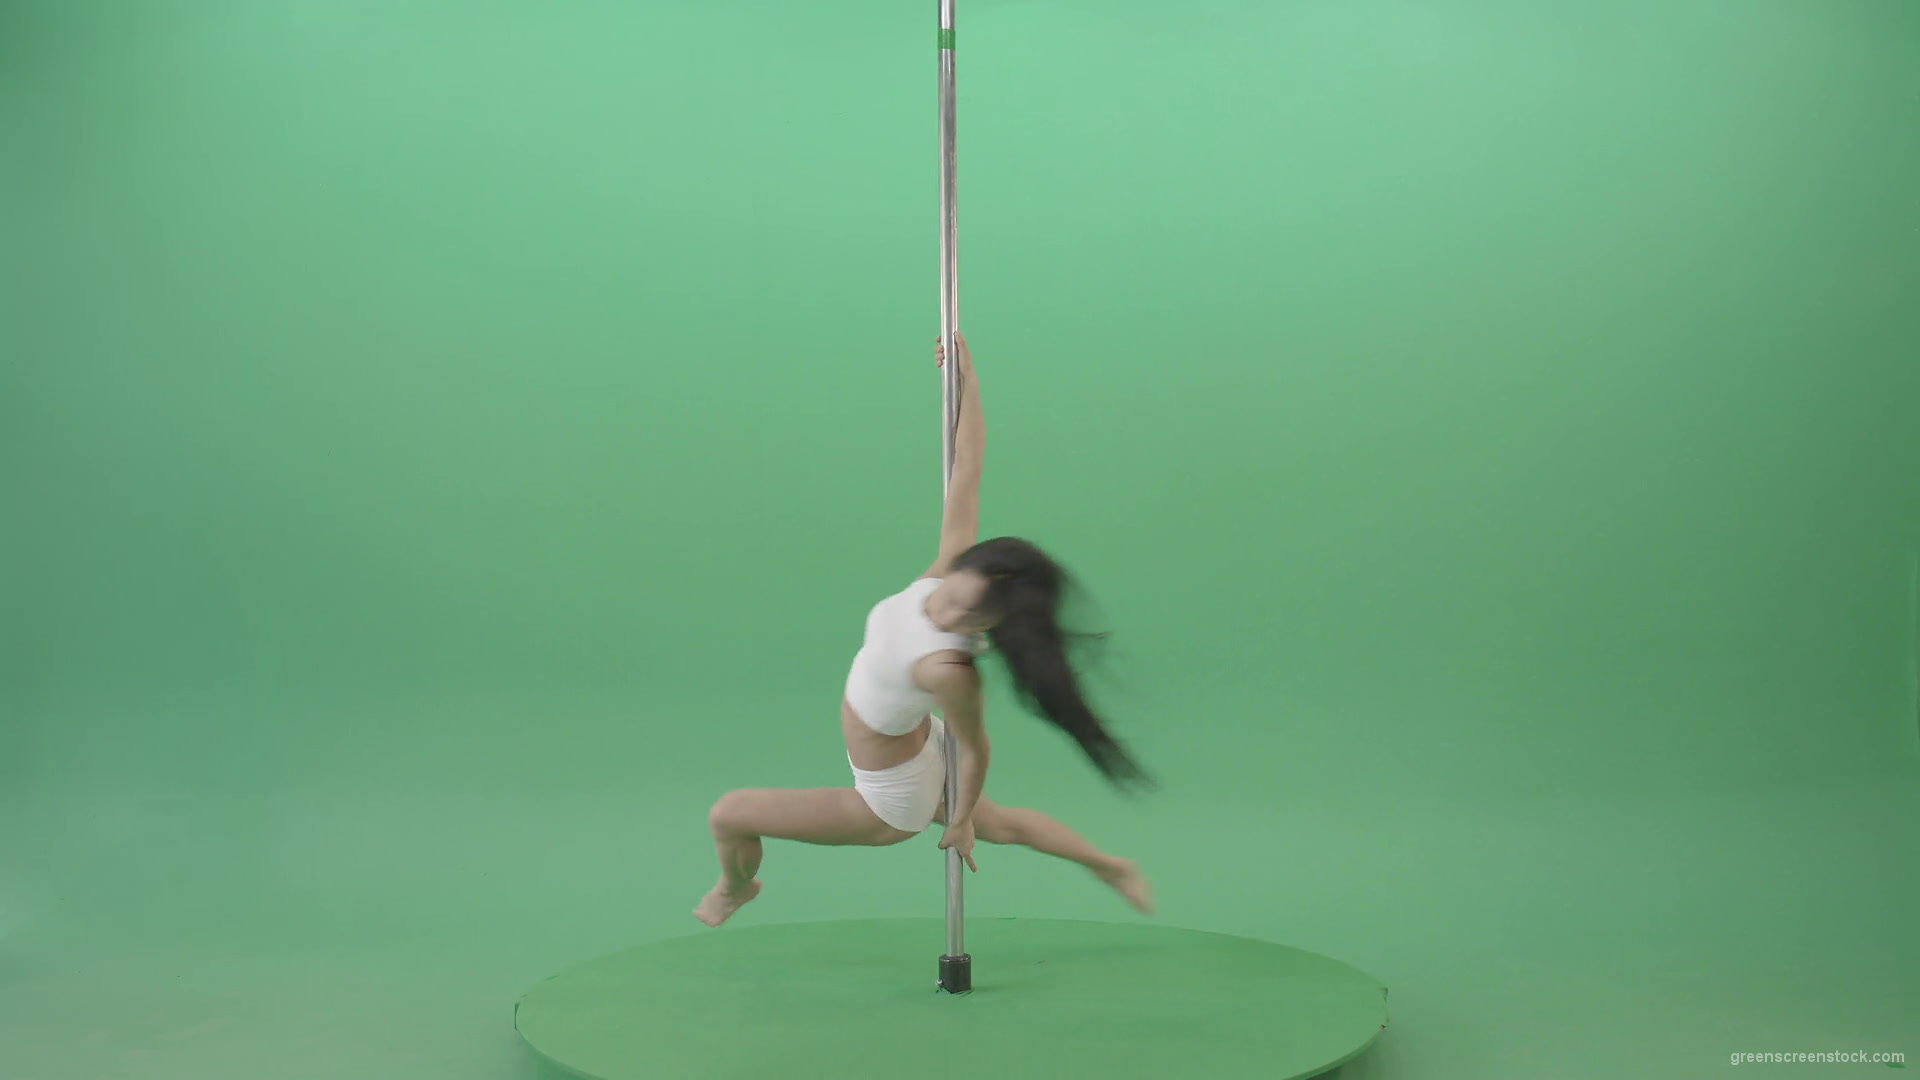 Acrobatic-gymnastics-making-spin-element-on-Pole-Pilon-on-green-screen-4K-Video-Footage-1920_006 Green Screen Stock